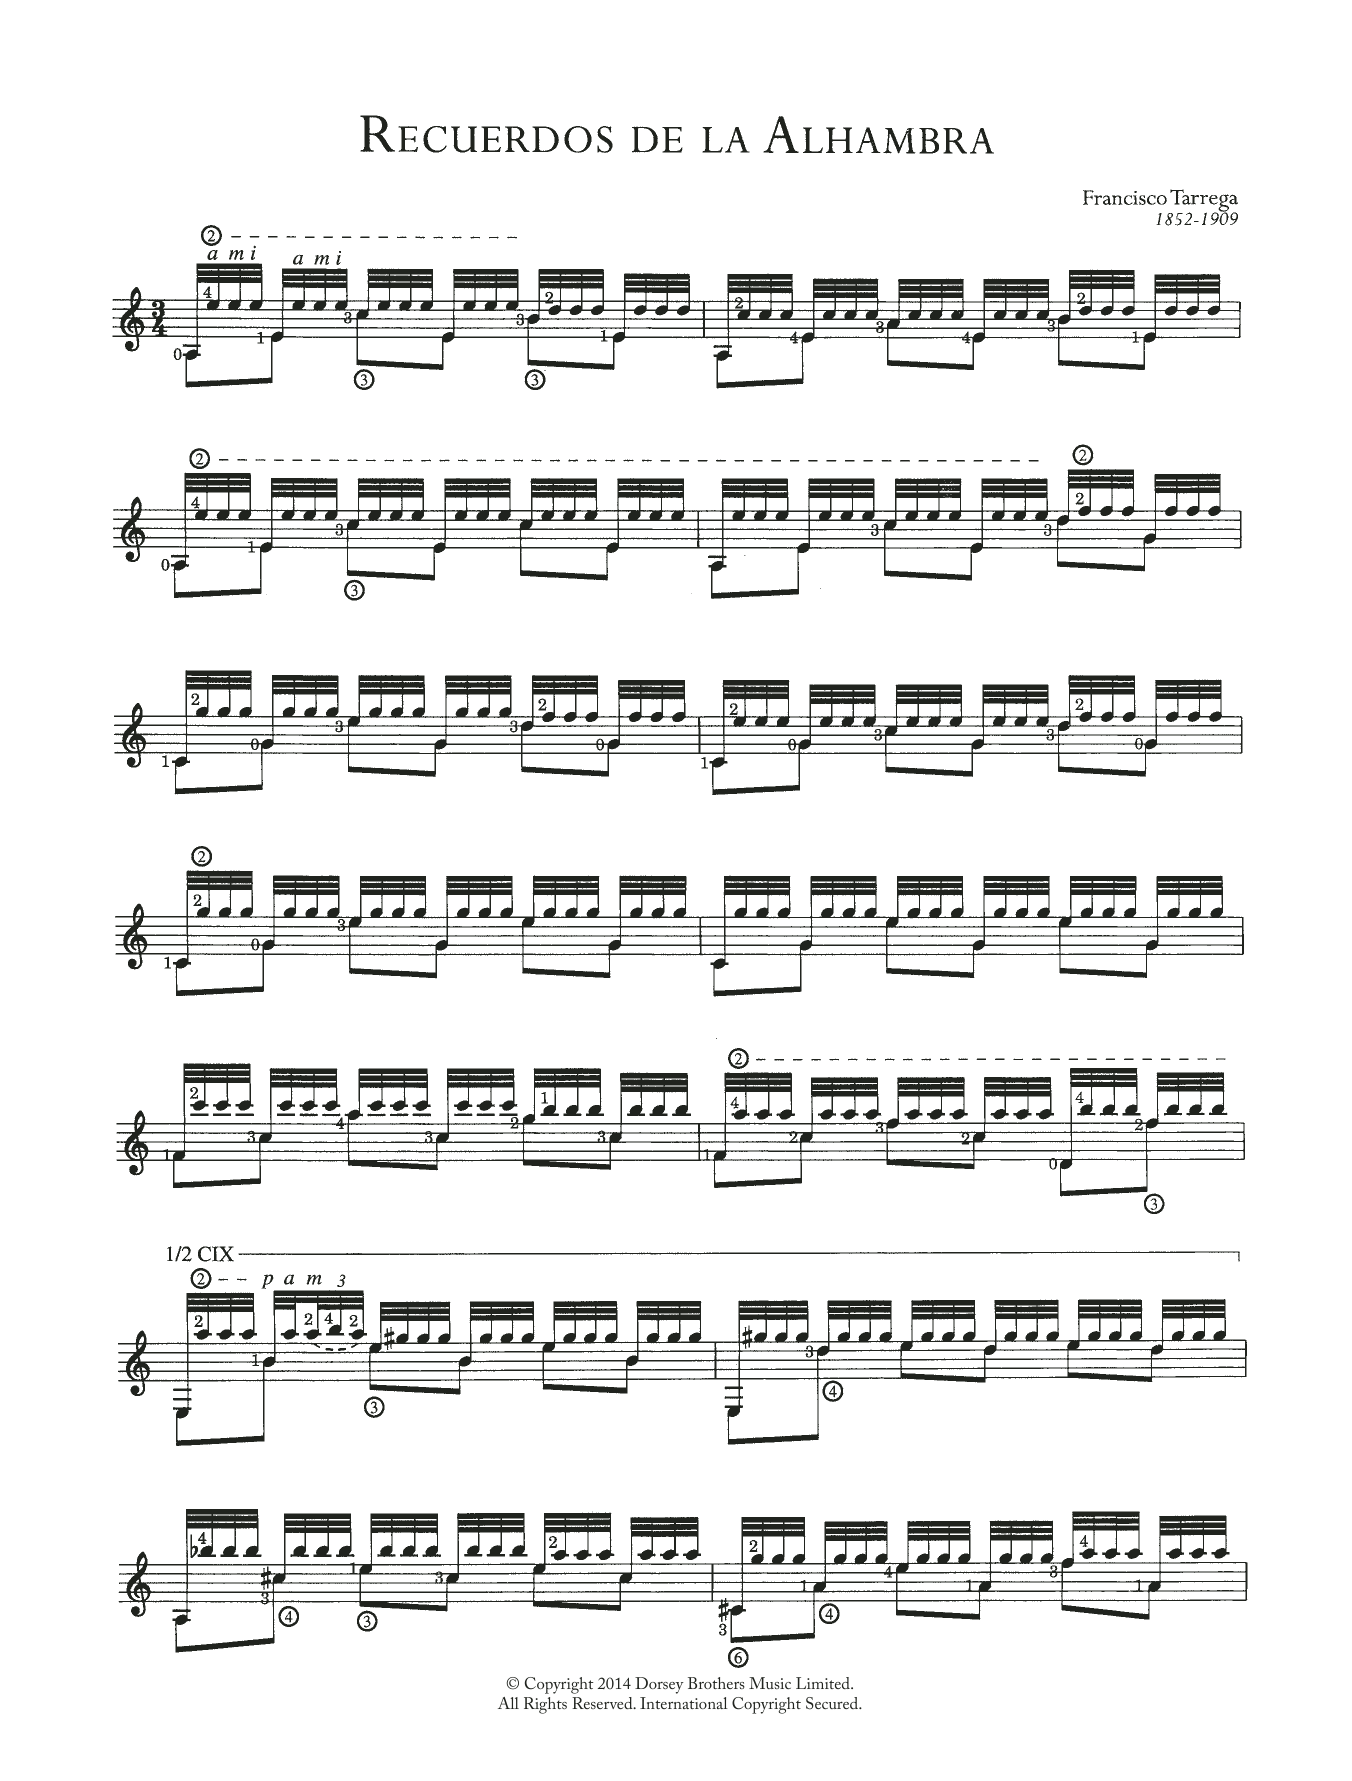 Francisco Tarrega Recuerdos de la Alhambra Sheet Music Notes & Chords for Woodwind Solo - Download or Print PDF